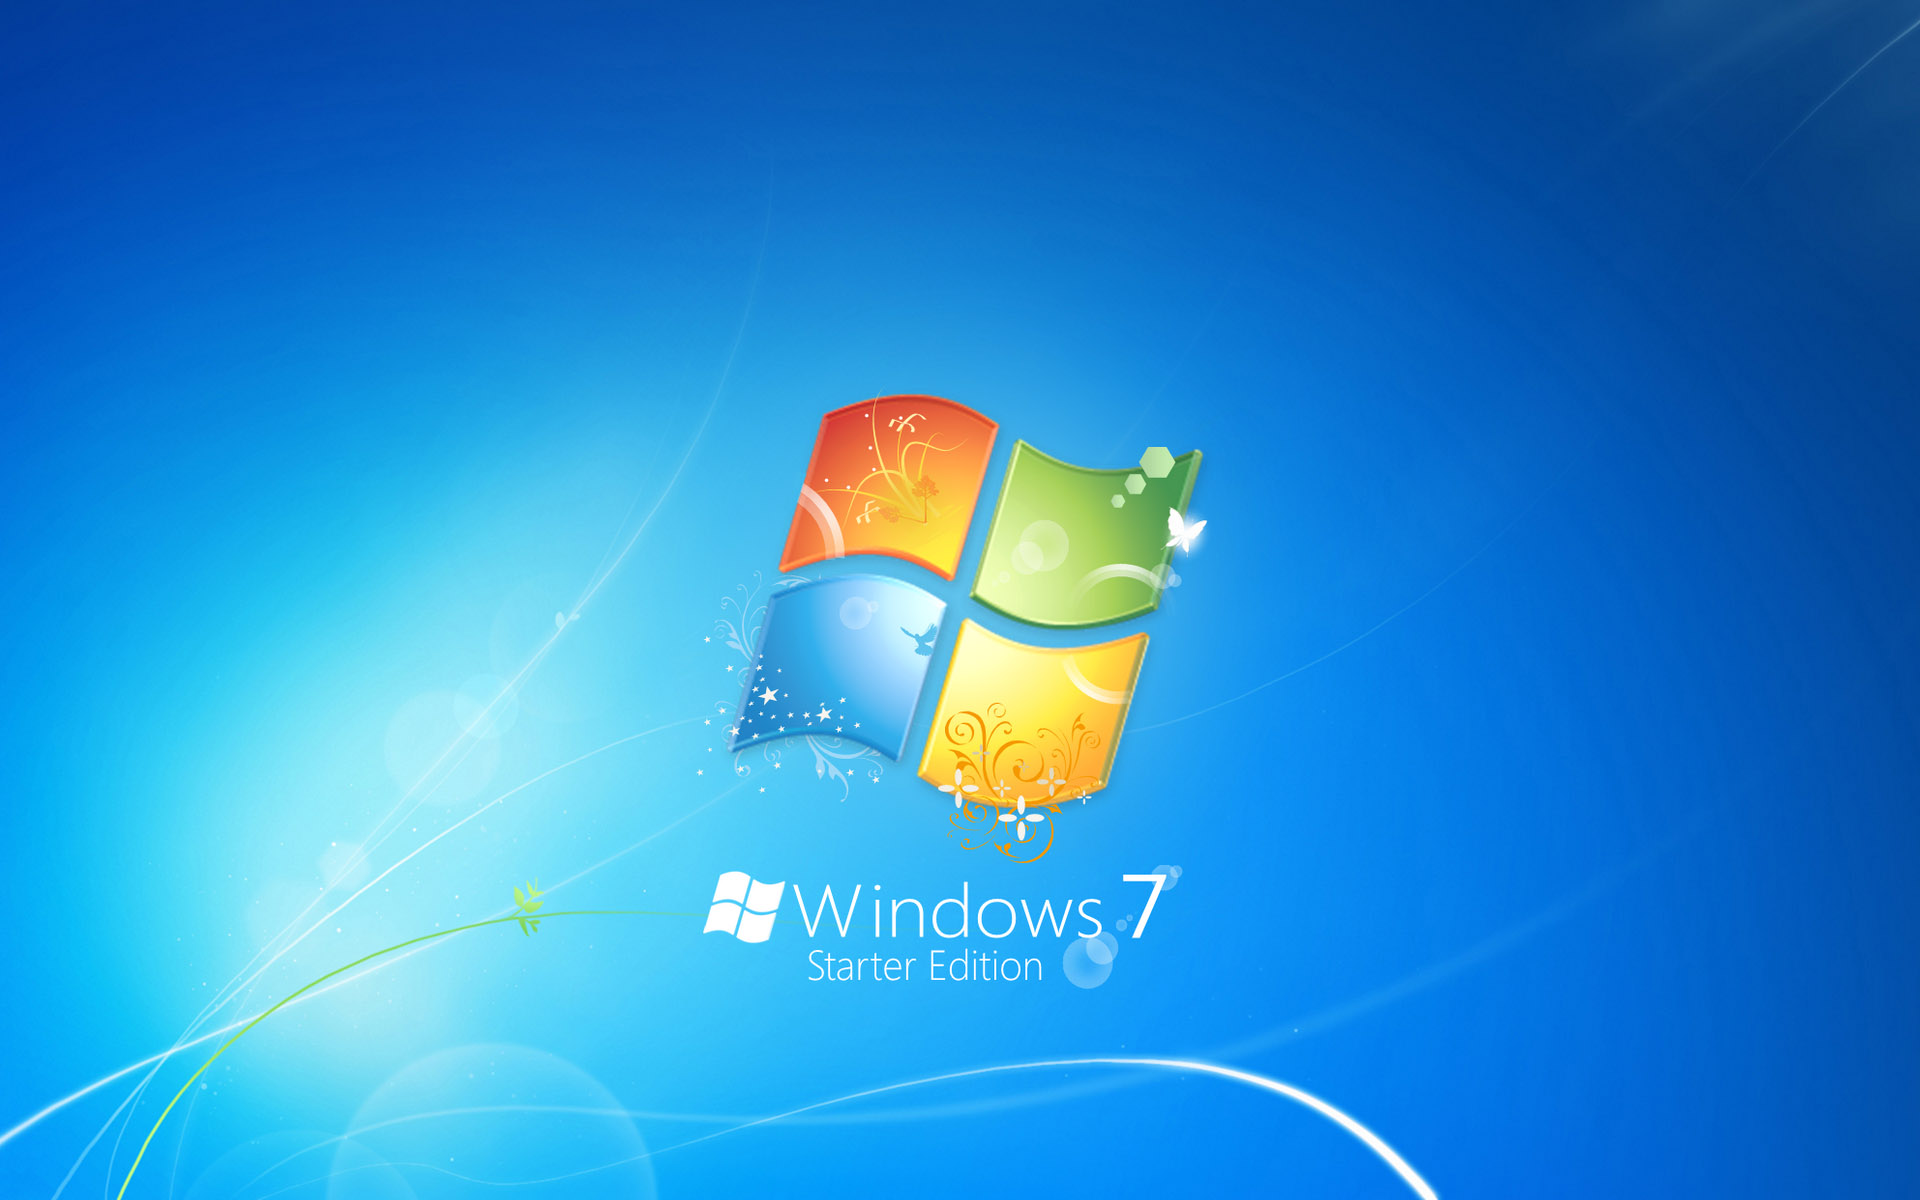 Windows 7 Starter Edition   Windows 7 Wallpaper 26875574